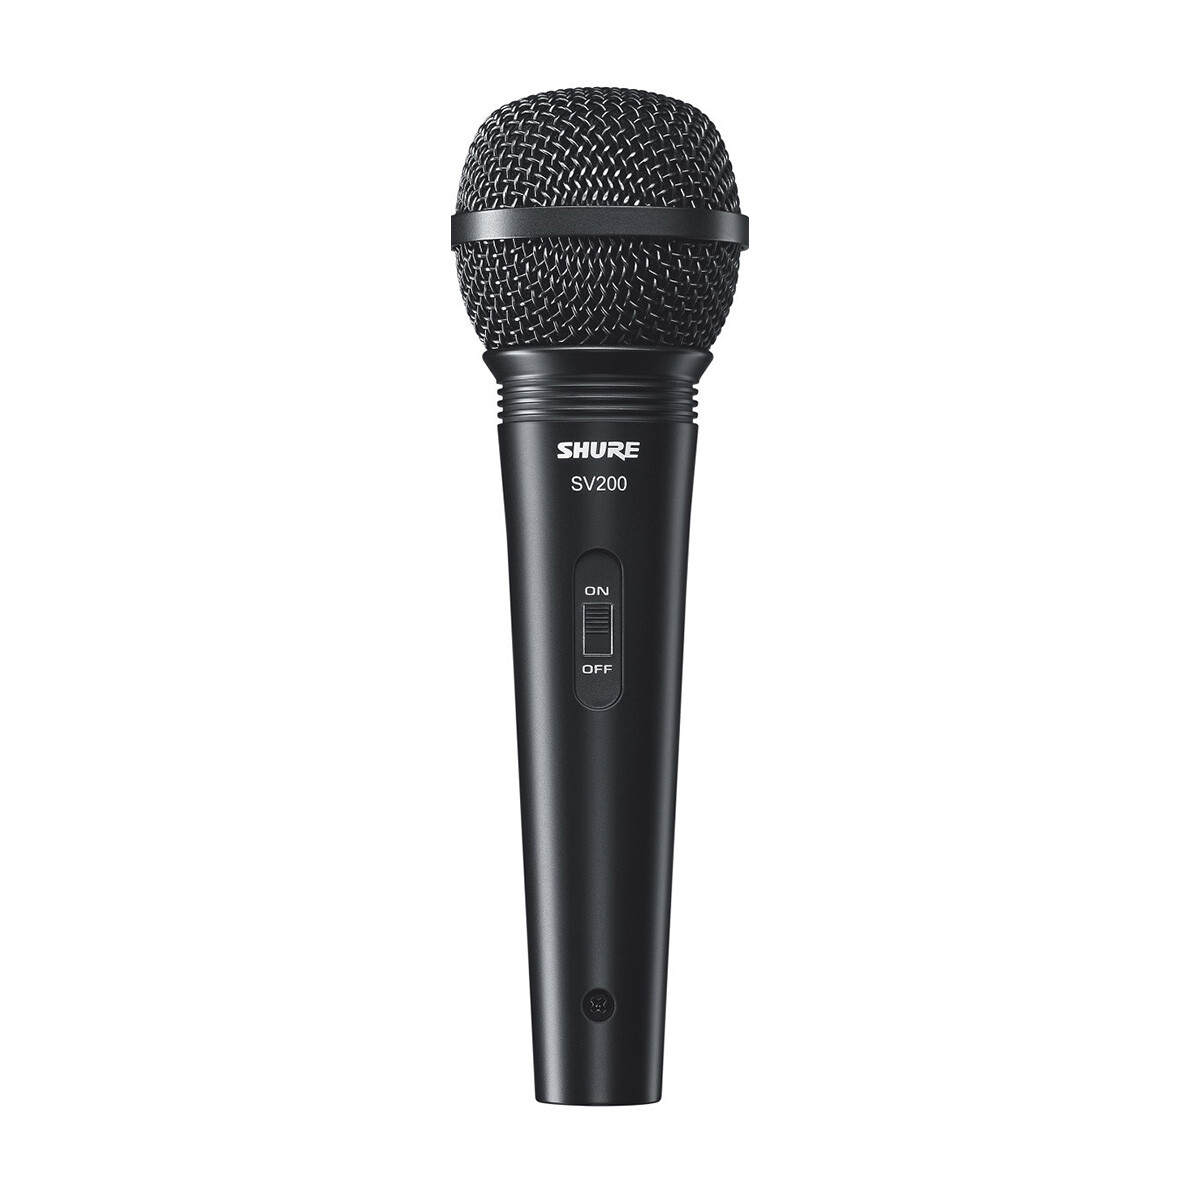 Micrófono vocal cardioide dinámico shure sv200 karaoke cable xlr - Negro 